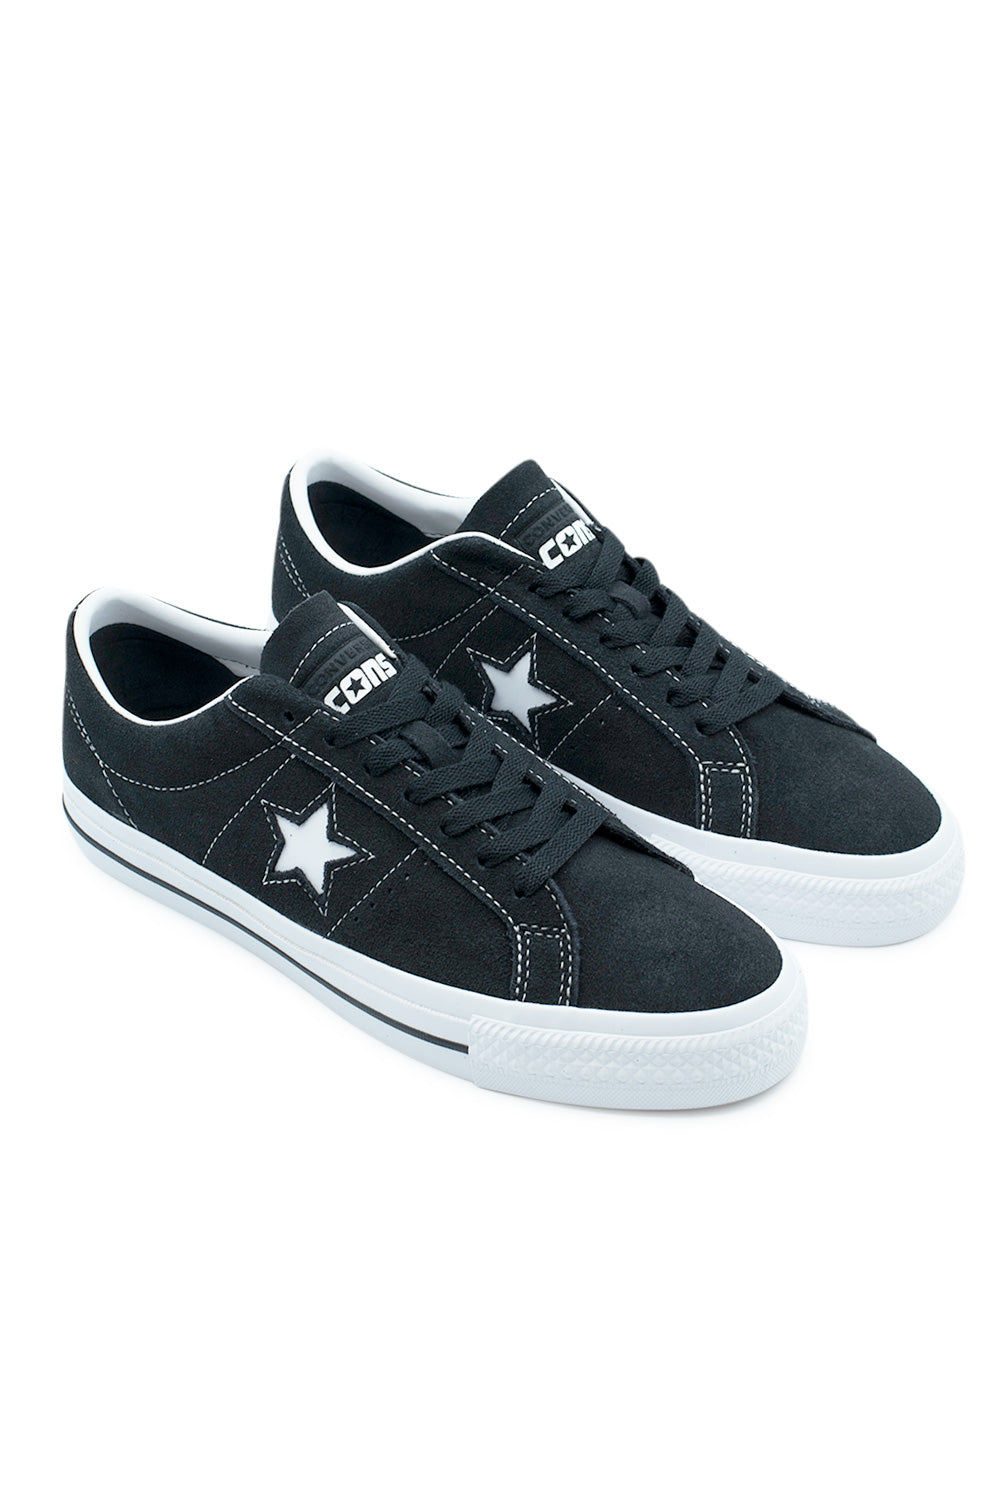 Converse CONS One Star Pro OX Shoe Black / Black / White - BONKERS